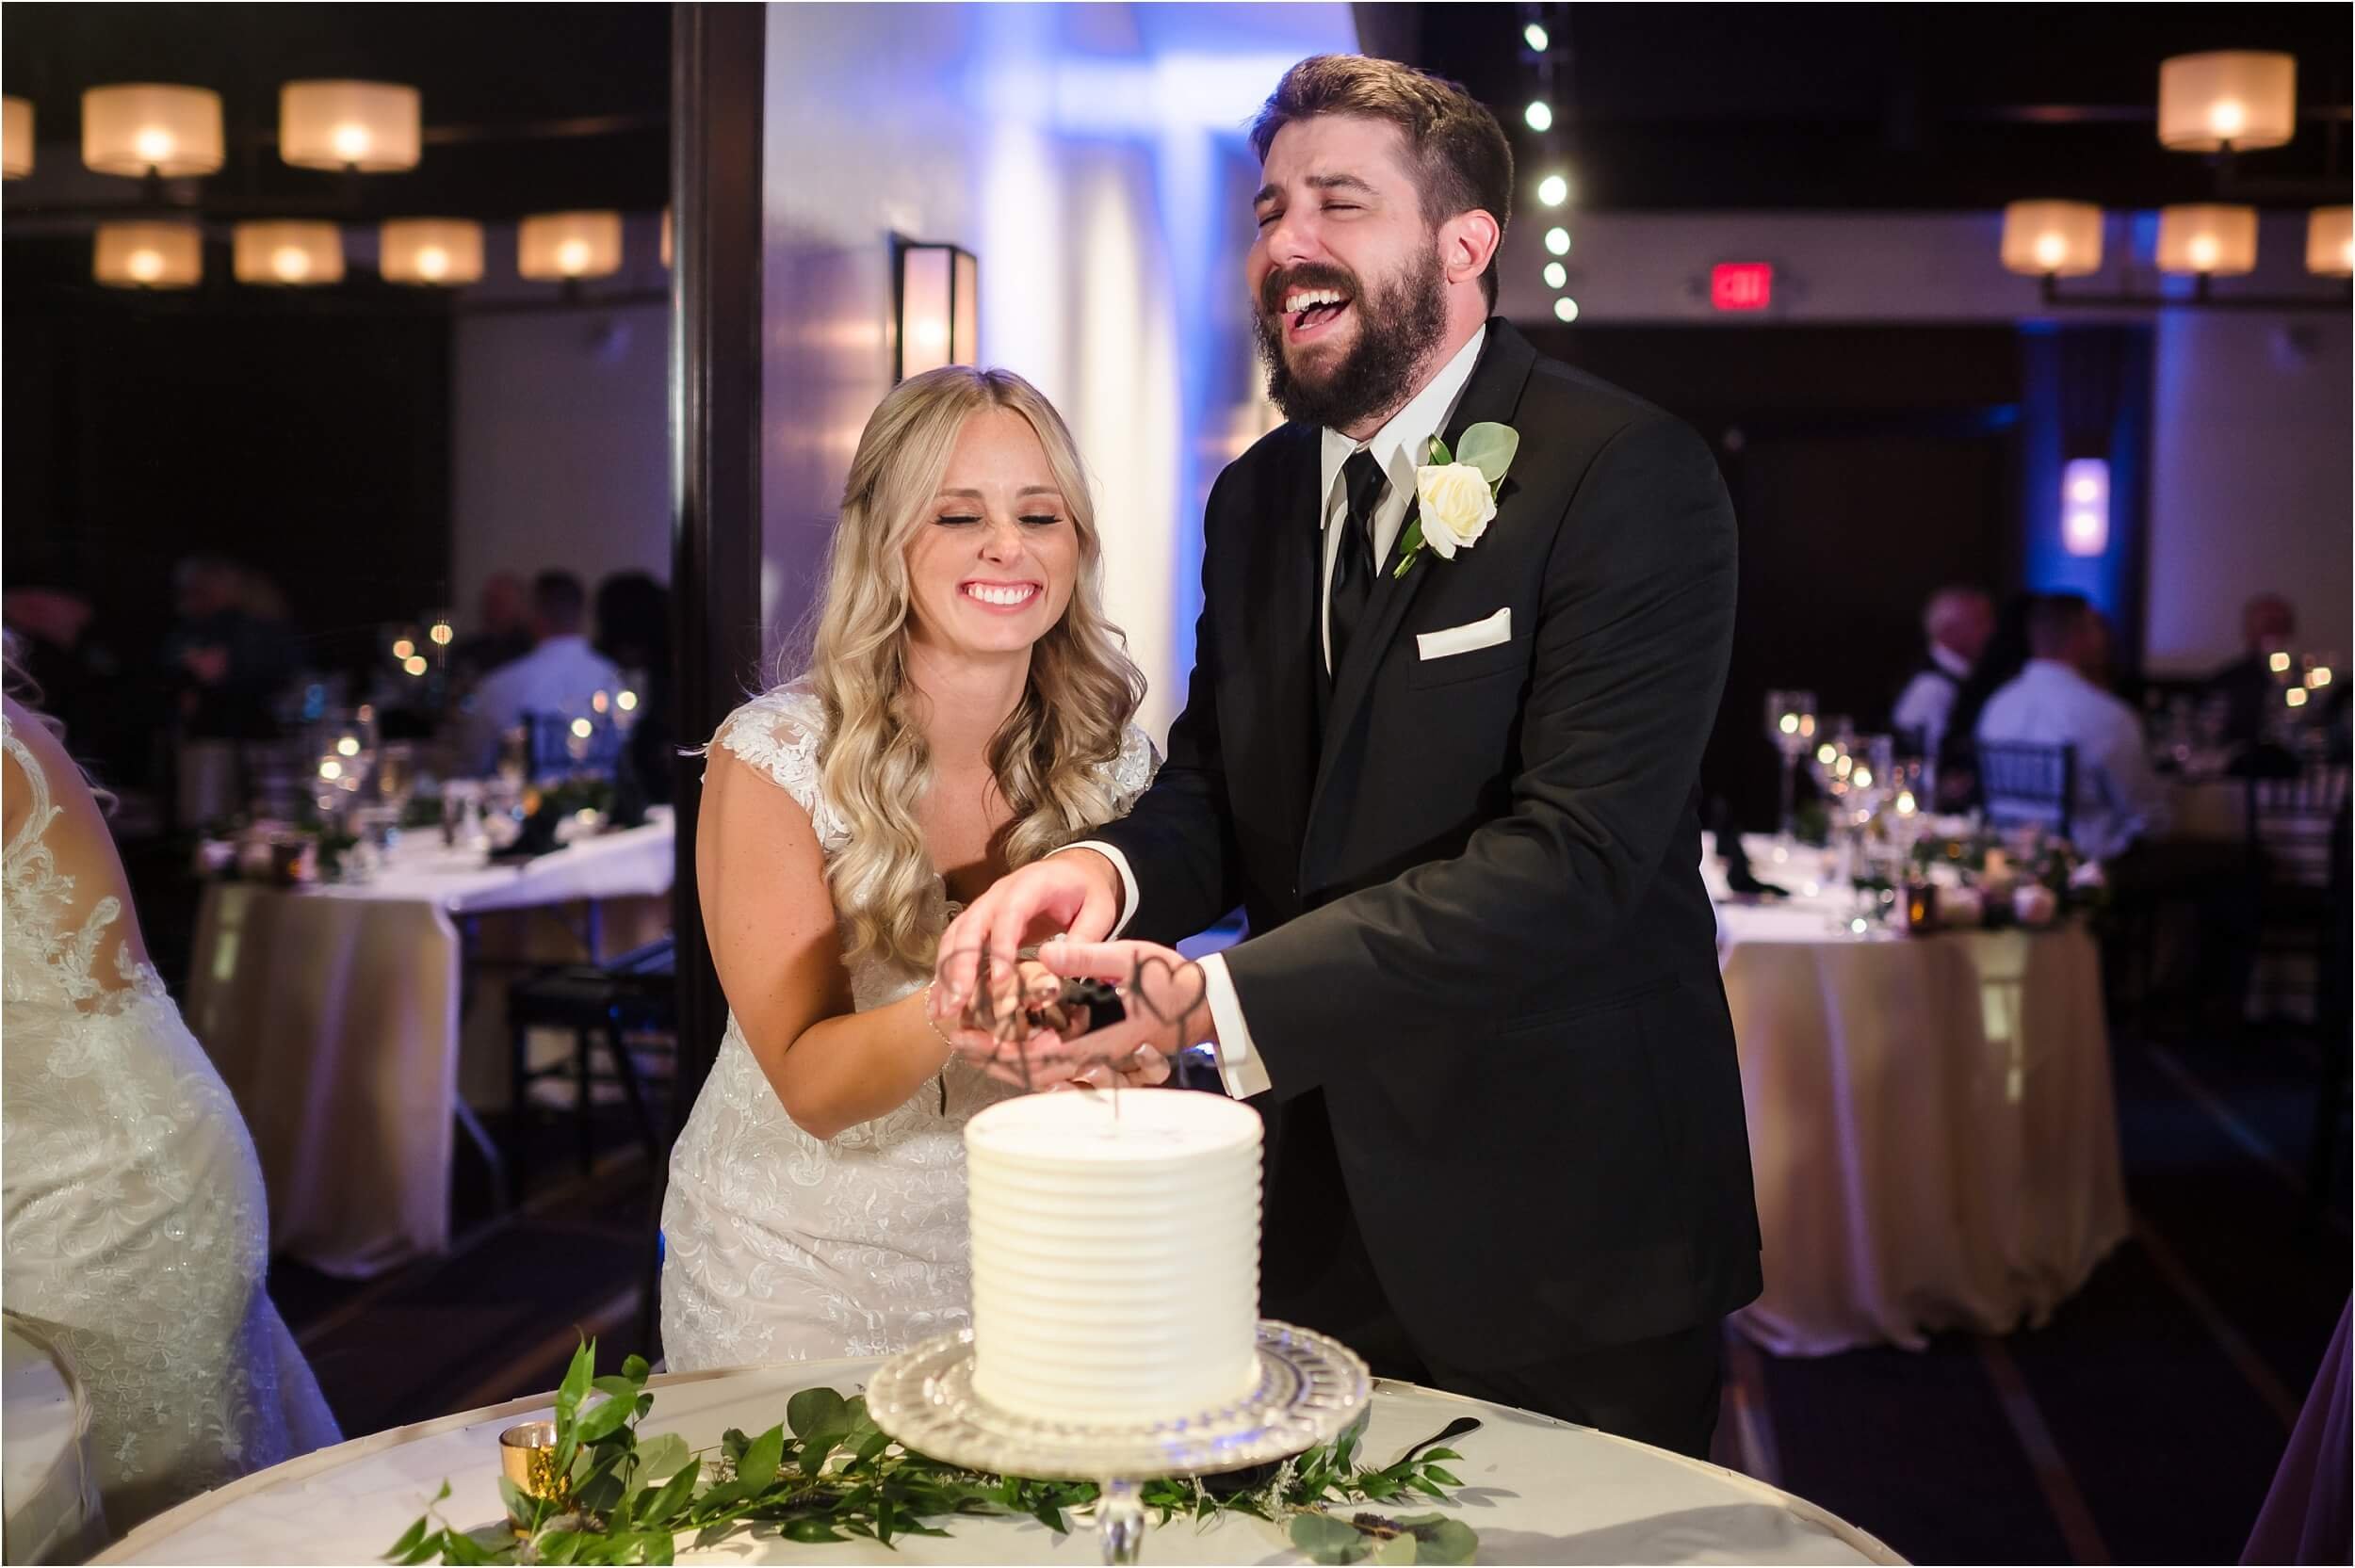  A couple laughing at their cake cutting at a hotel wedding reception venue near Ann Arbor, Michigan.  